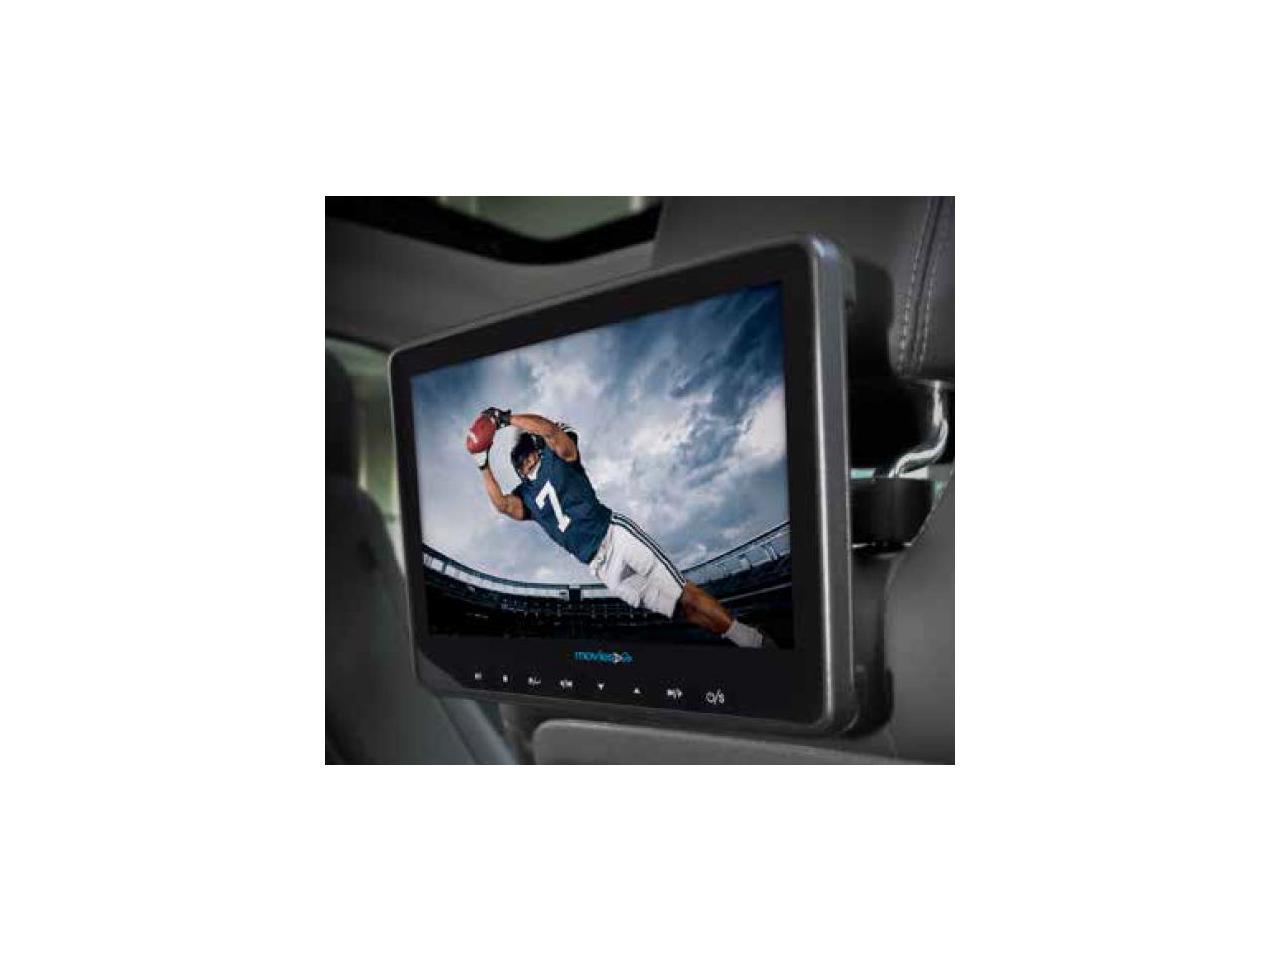 Audiovox AVX10USB Universal Seat-back DVD Video bundle with